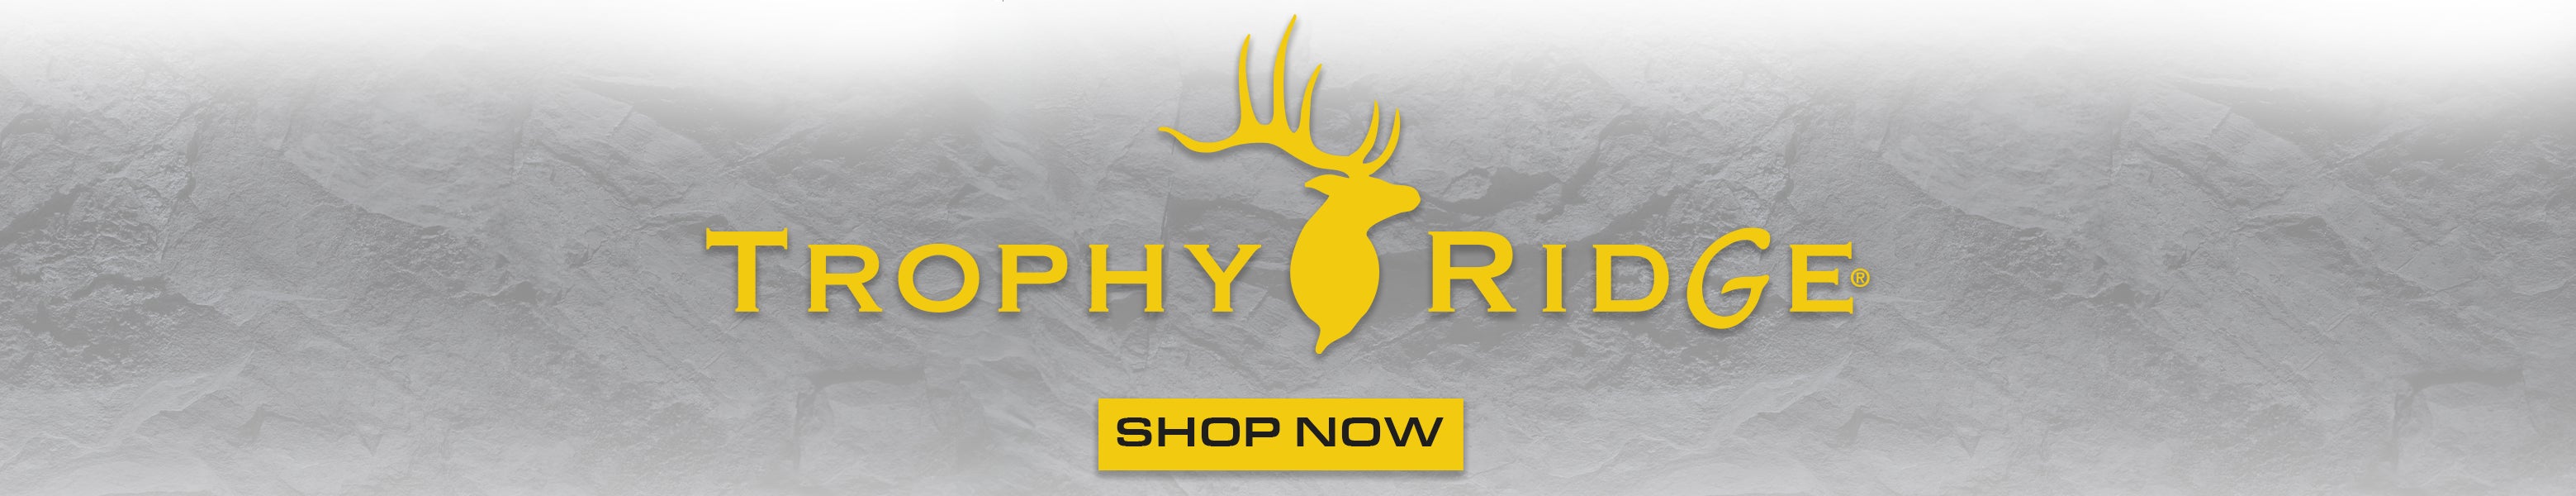 Shop All Trophy Ridge Archery Products